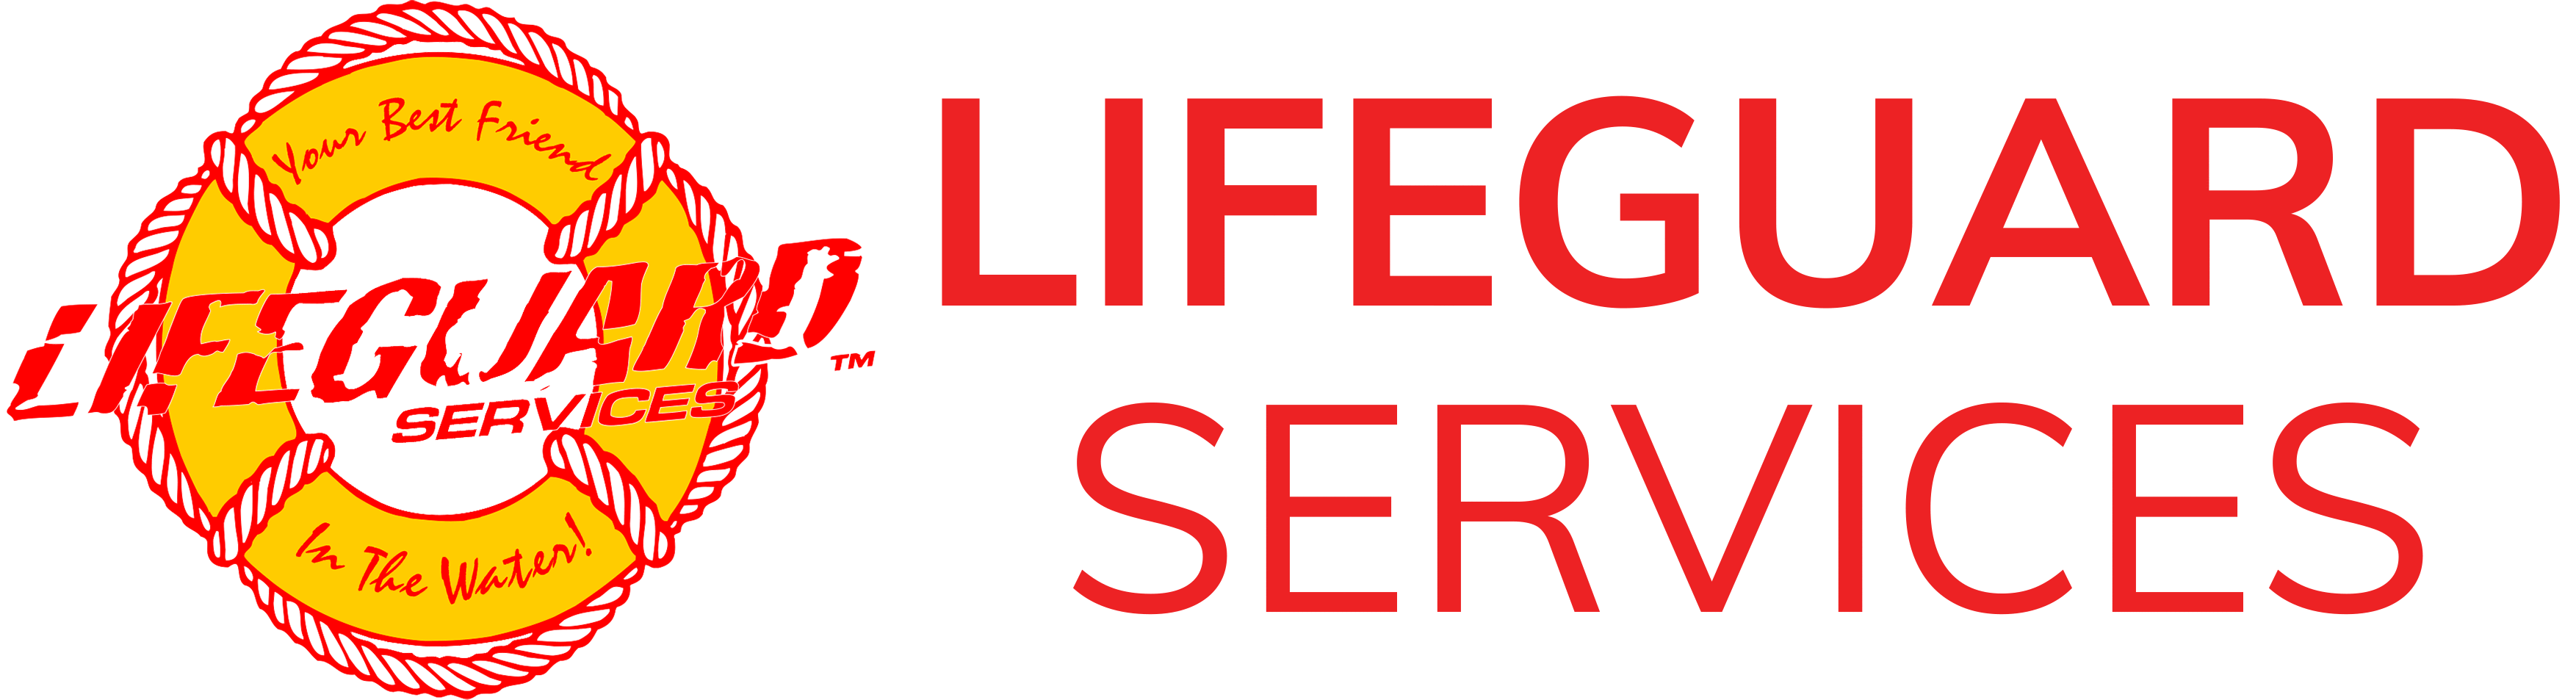 Lifeguard Services